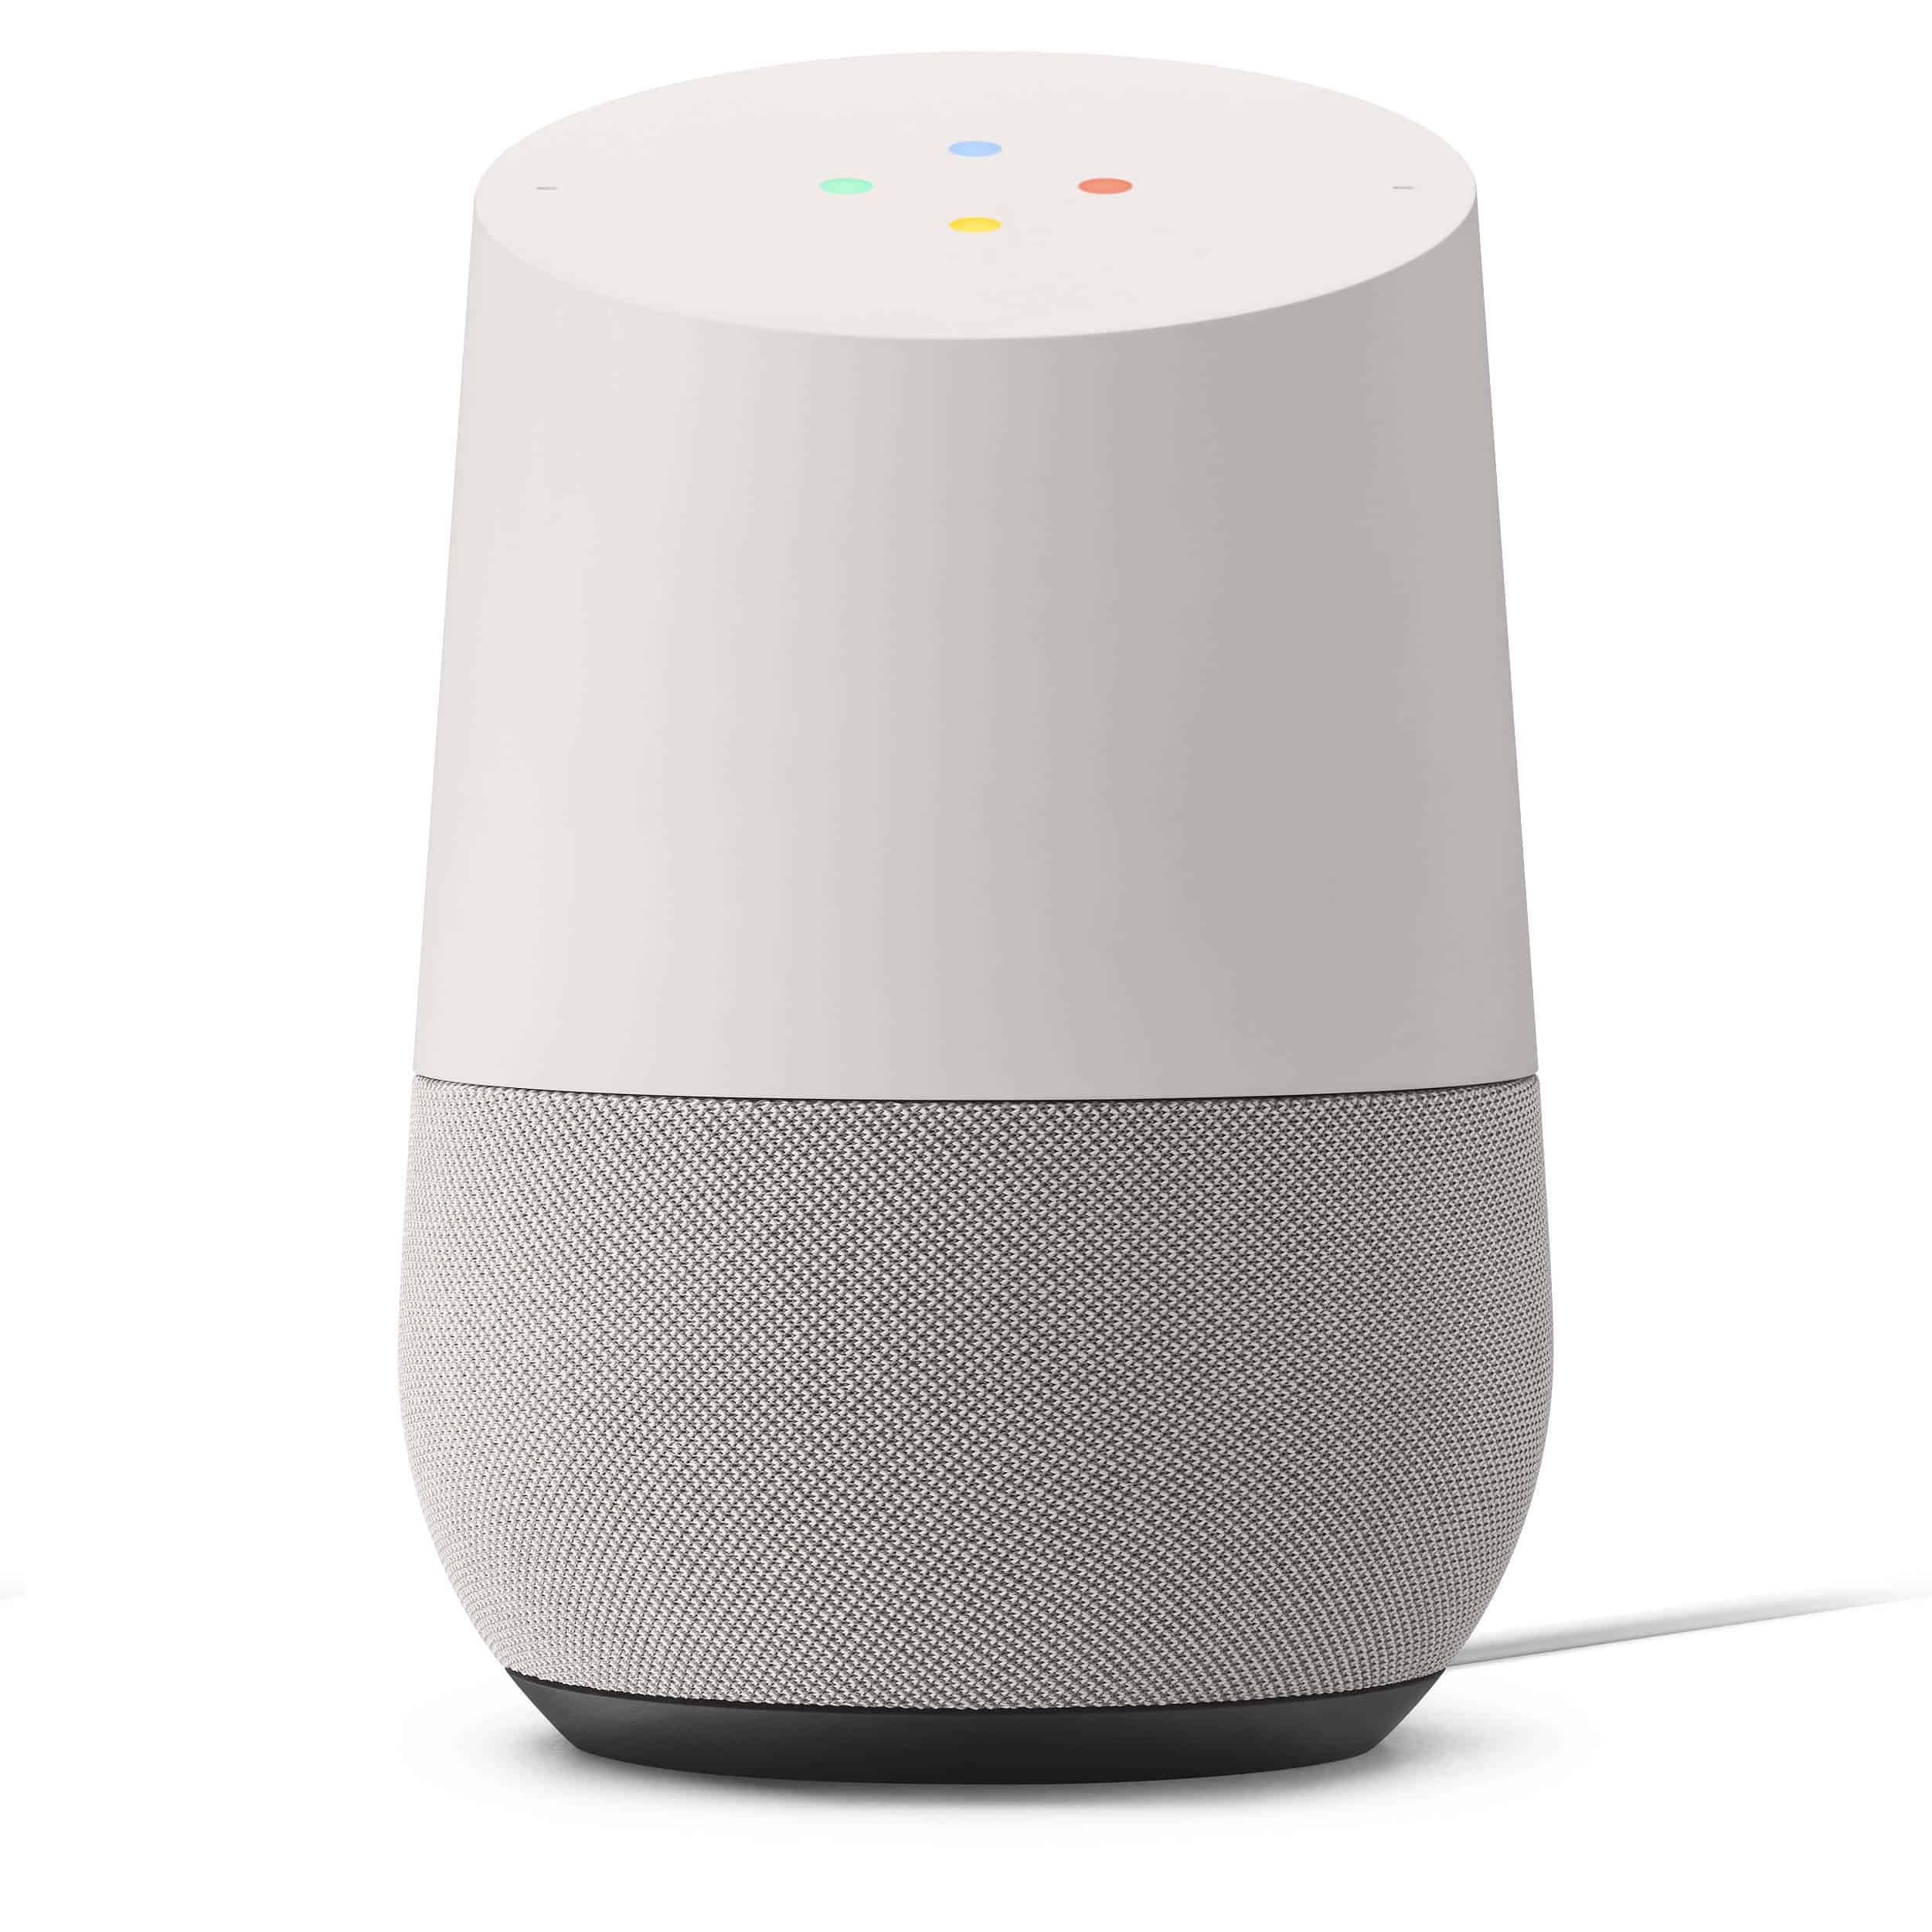 Save $30 on the Google Home smart speaker.